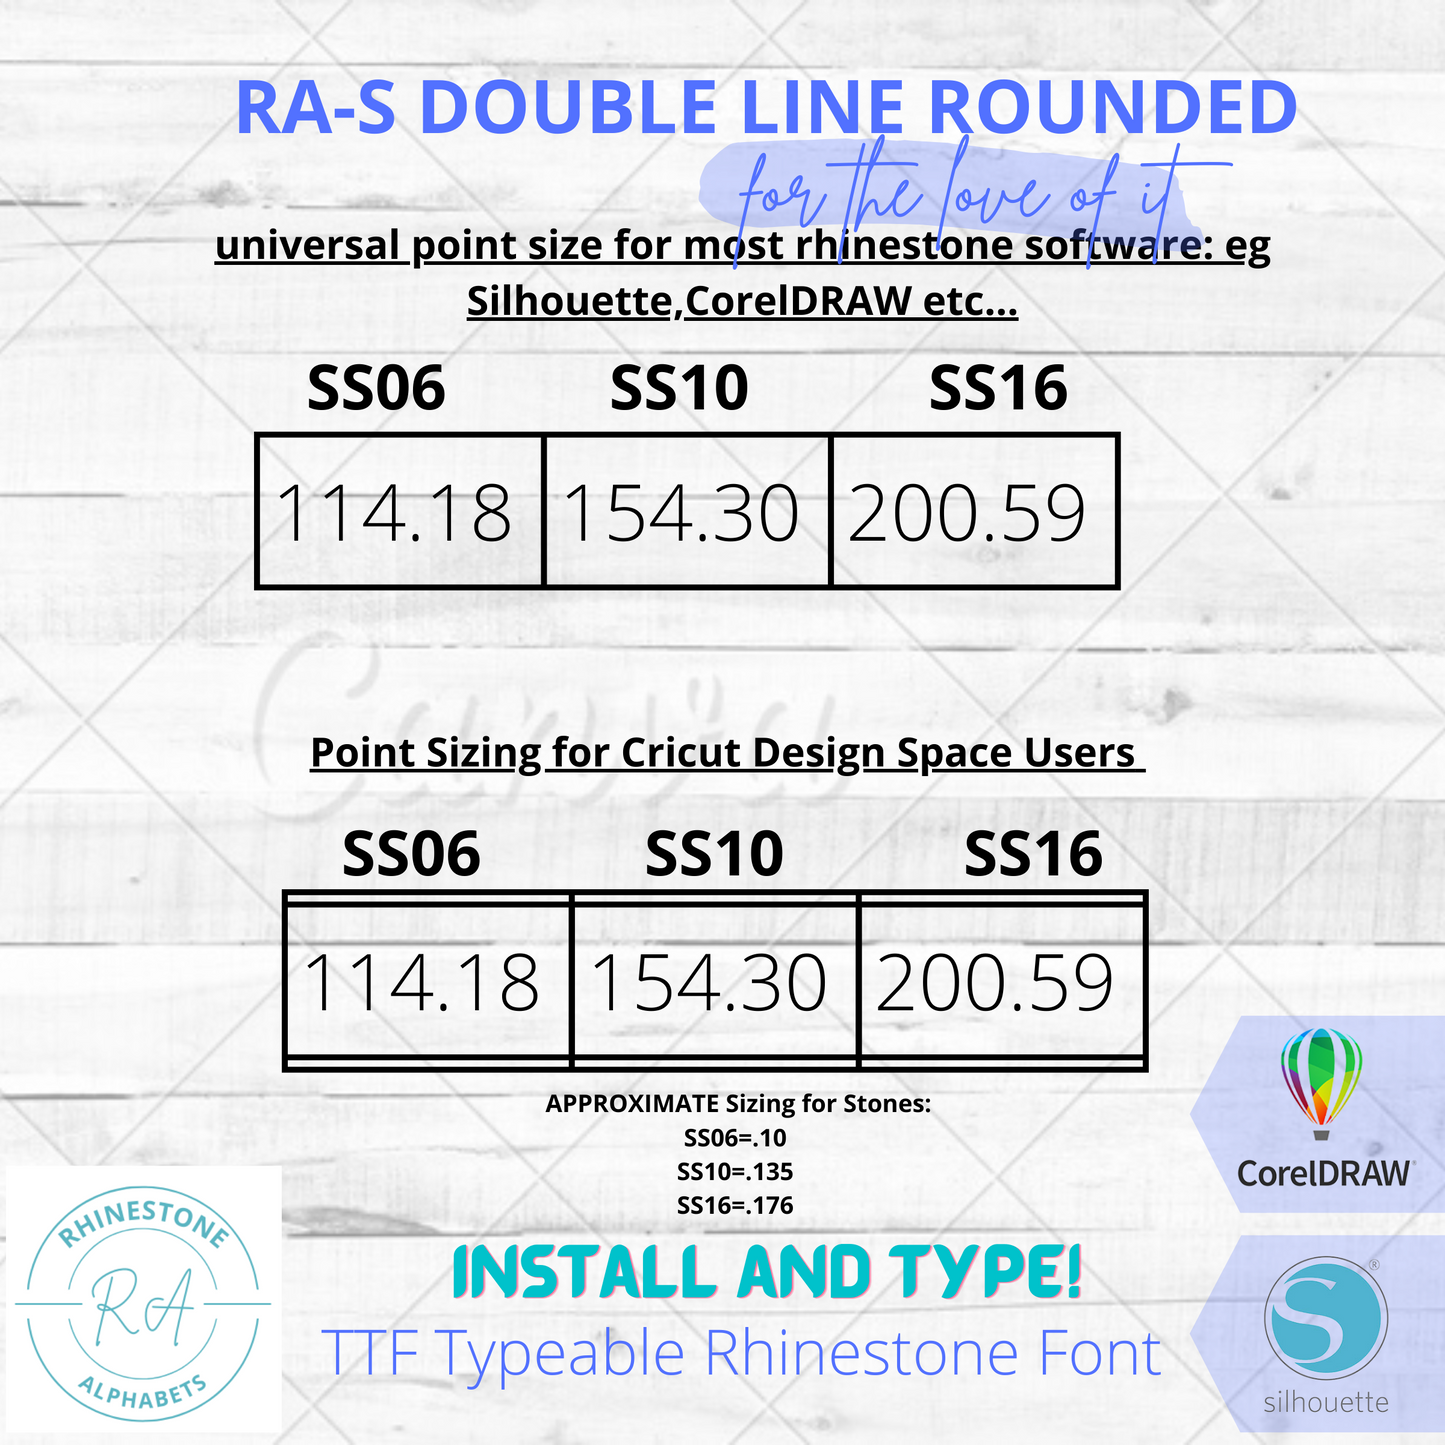 RA-S Doubleline Rounded